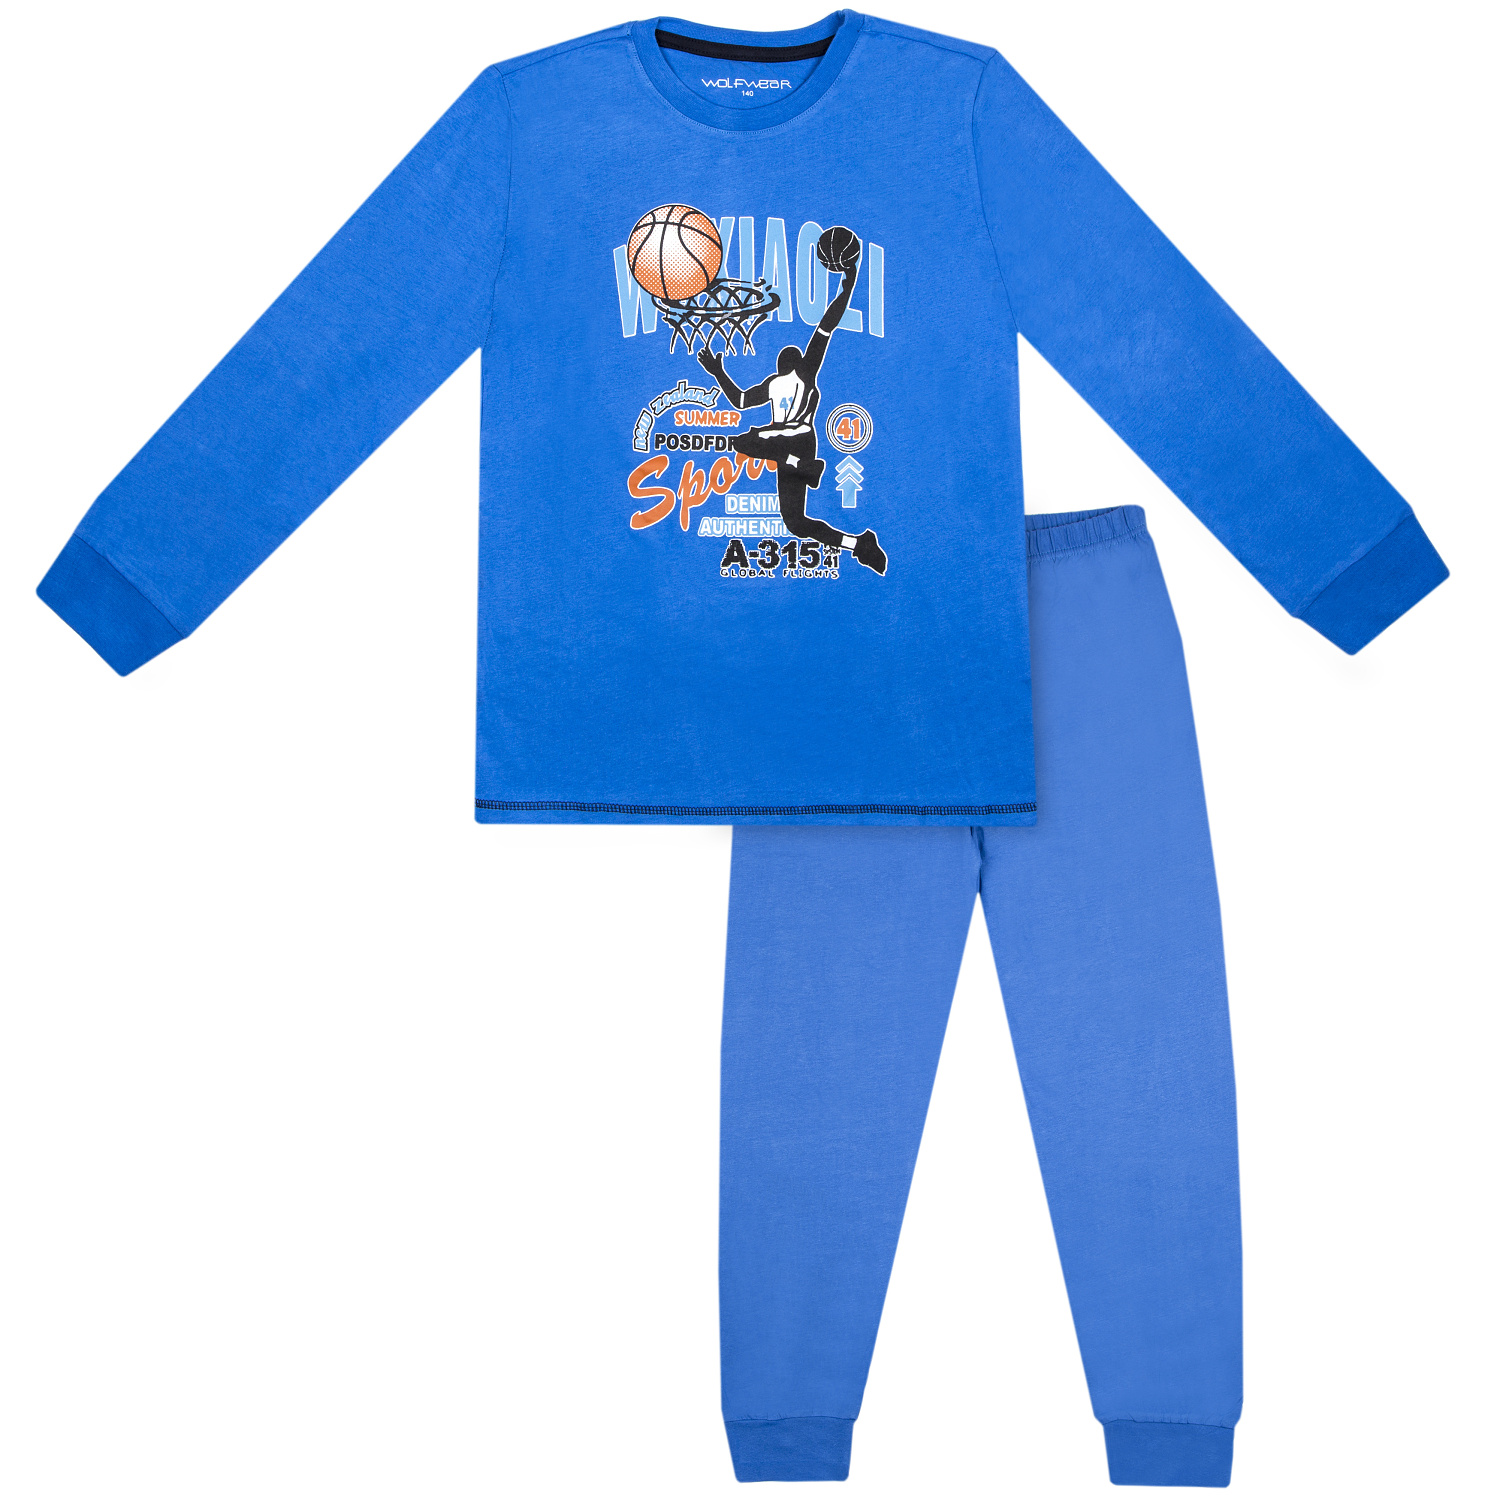 Chlapecké pyžamo - Wolf S2256B, modrá Barva: Modrá, Velikost: 146